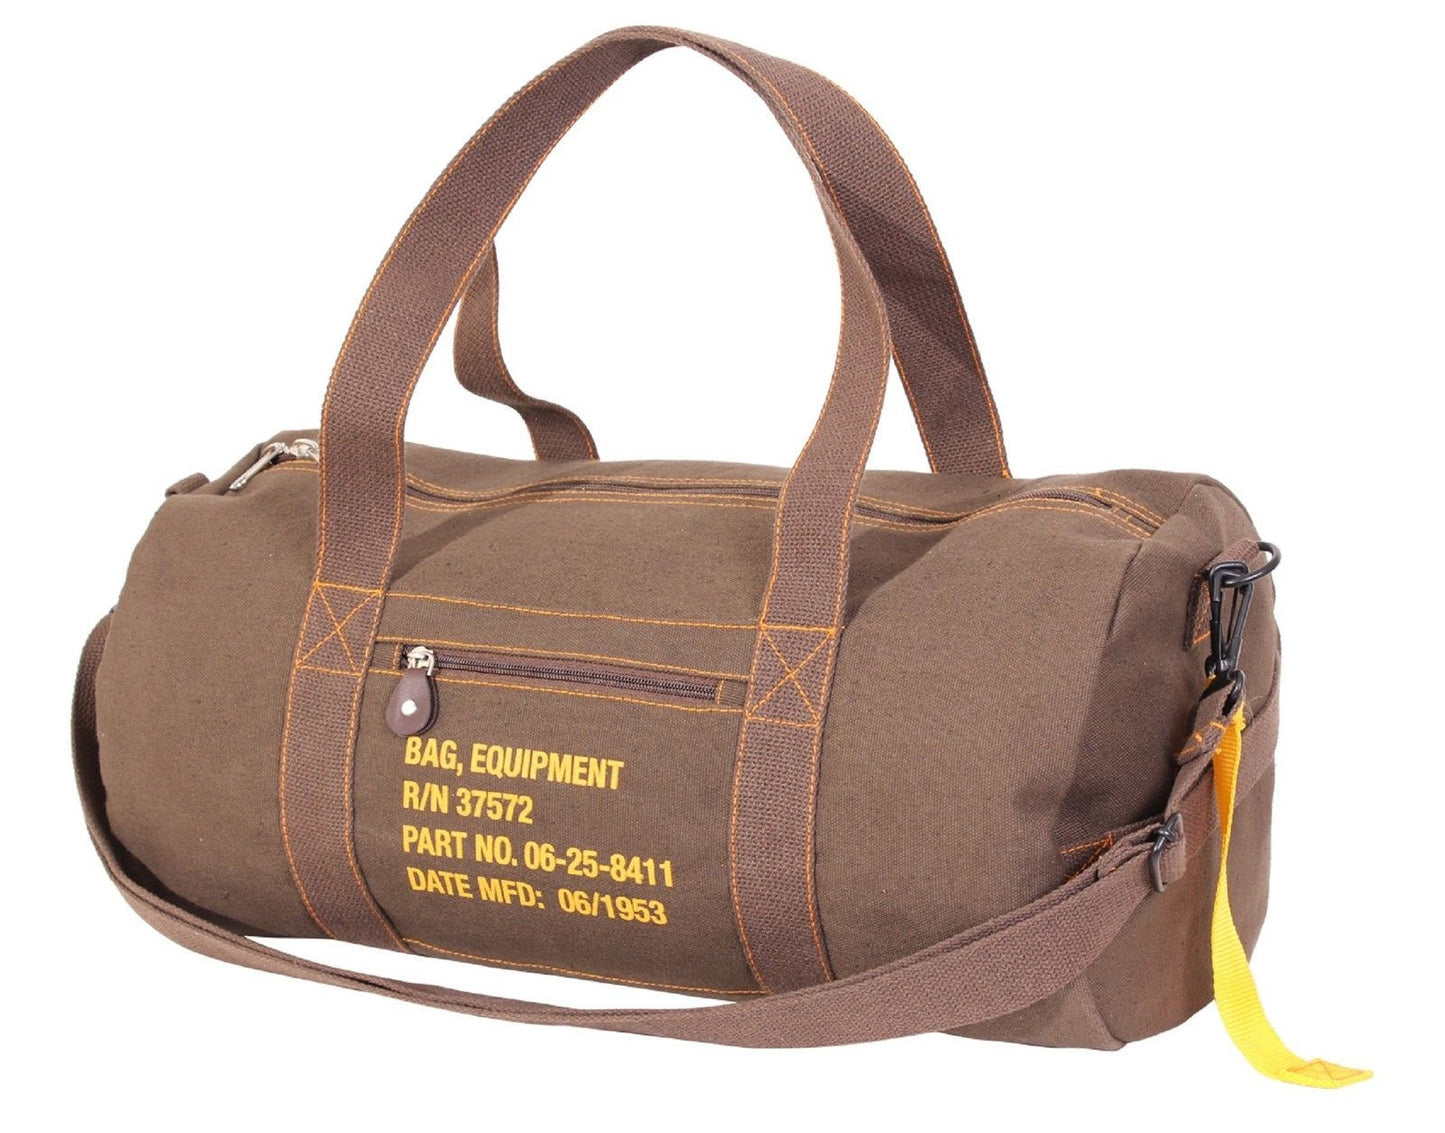 Rothco Brown Canvas Equipment Gear Shoulder Bag w/ Strap & Handles